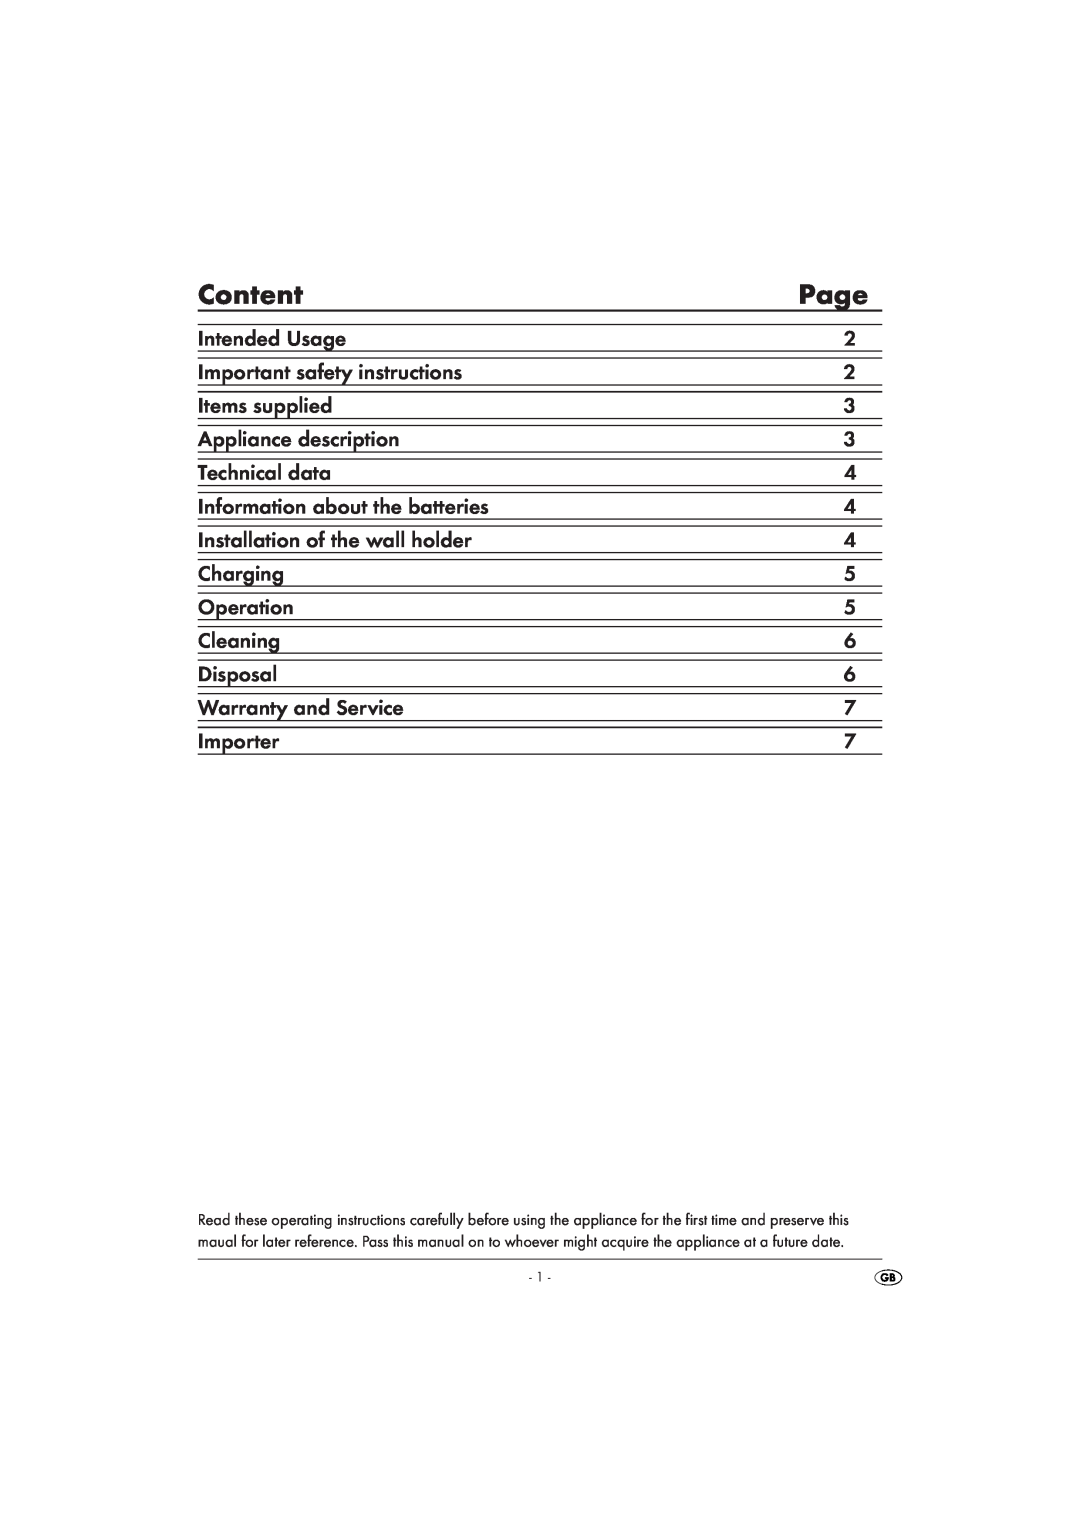 Kompernass KH4423 manual Content, Page 